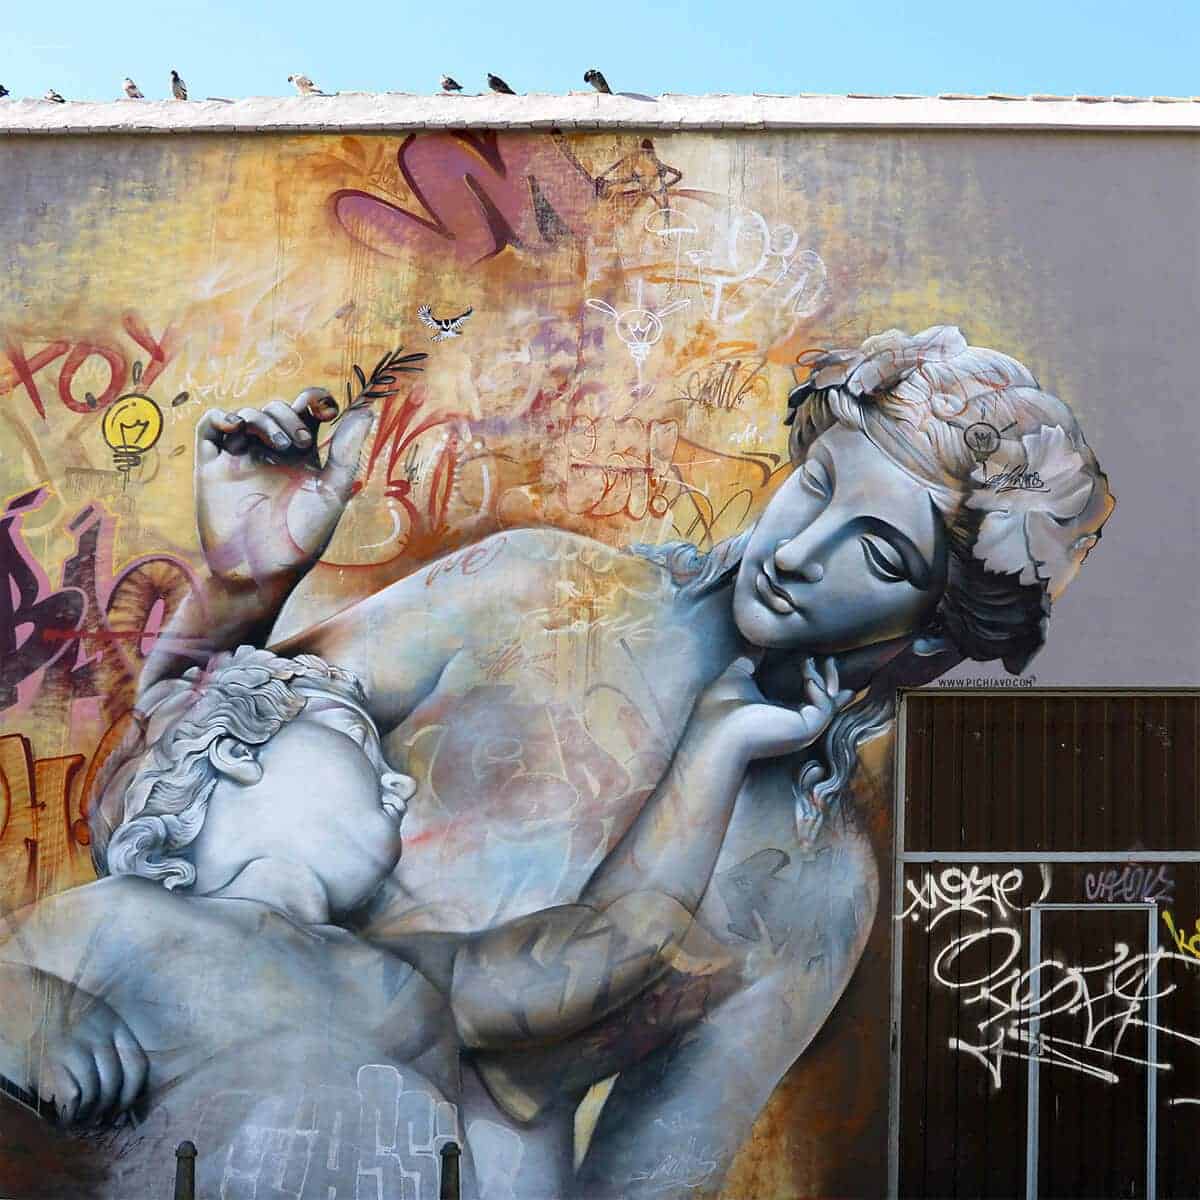 Griekse goden en graffiti door Pichi & Avo